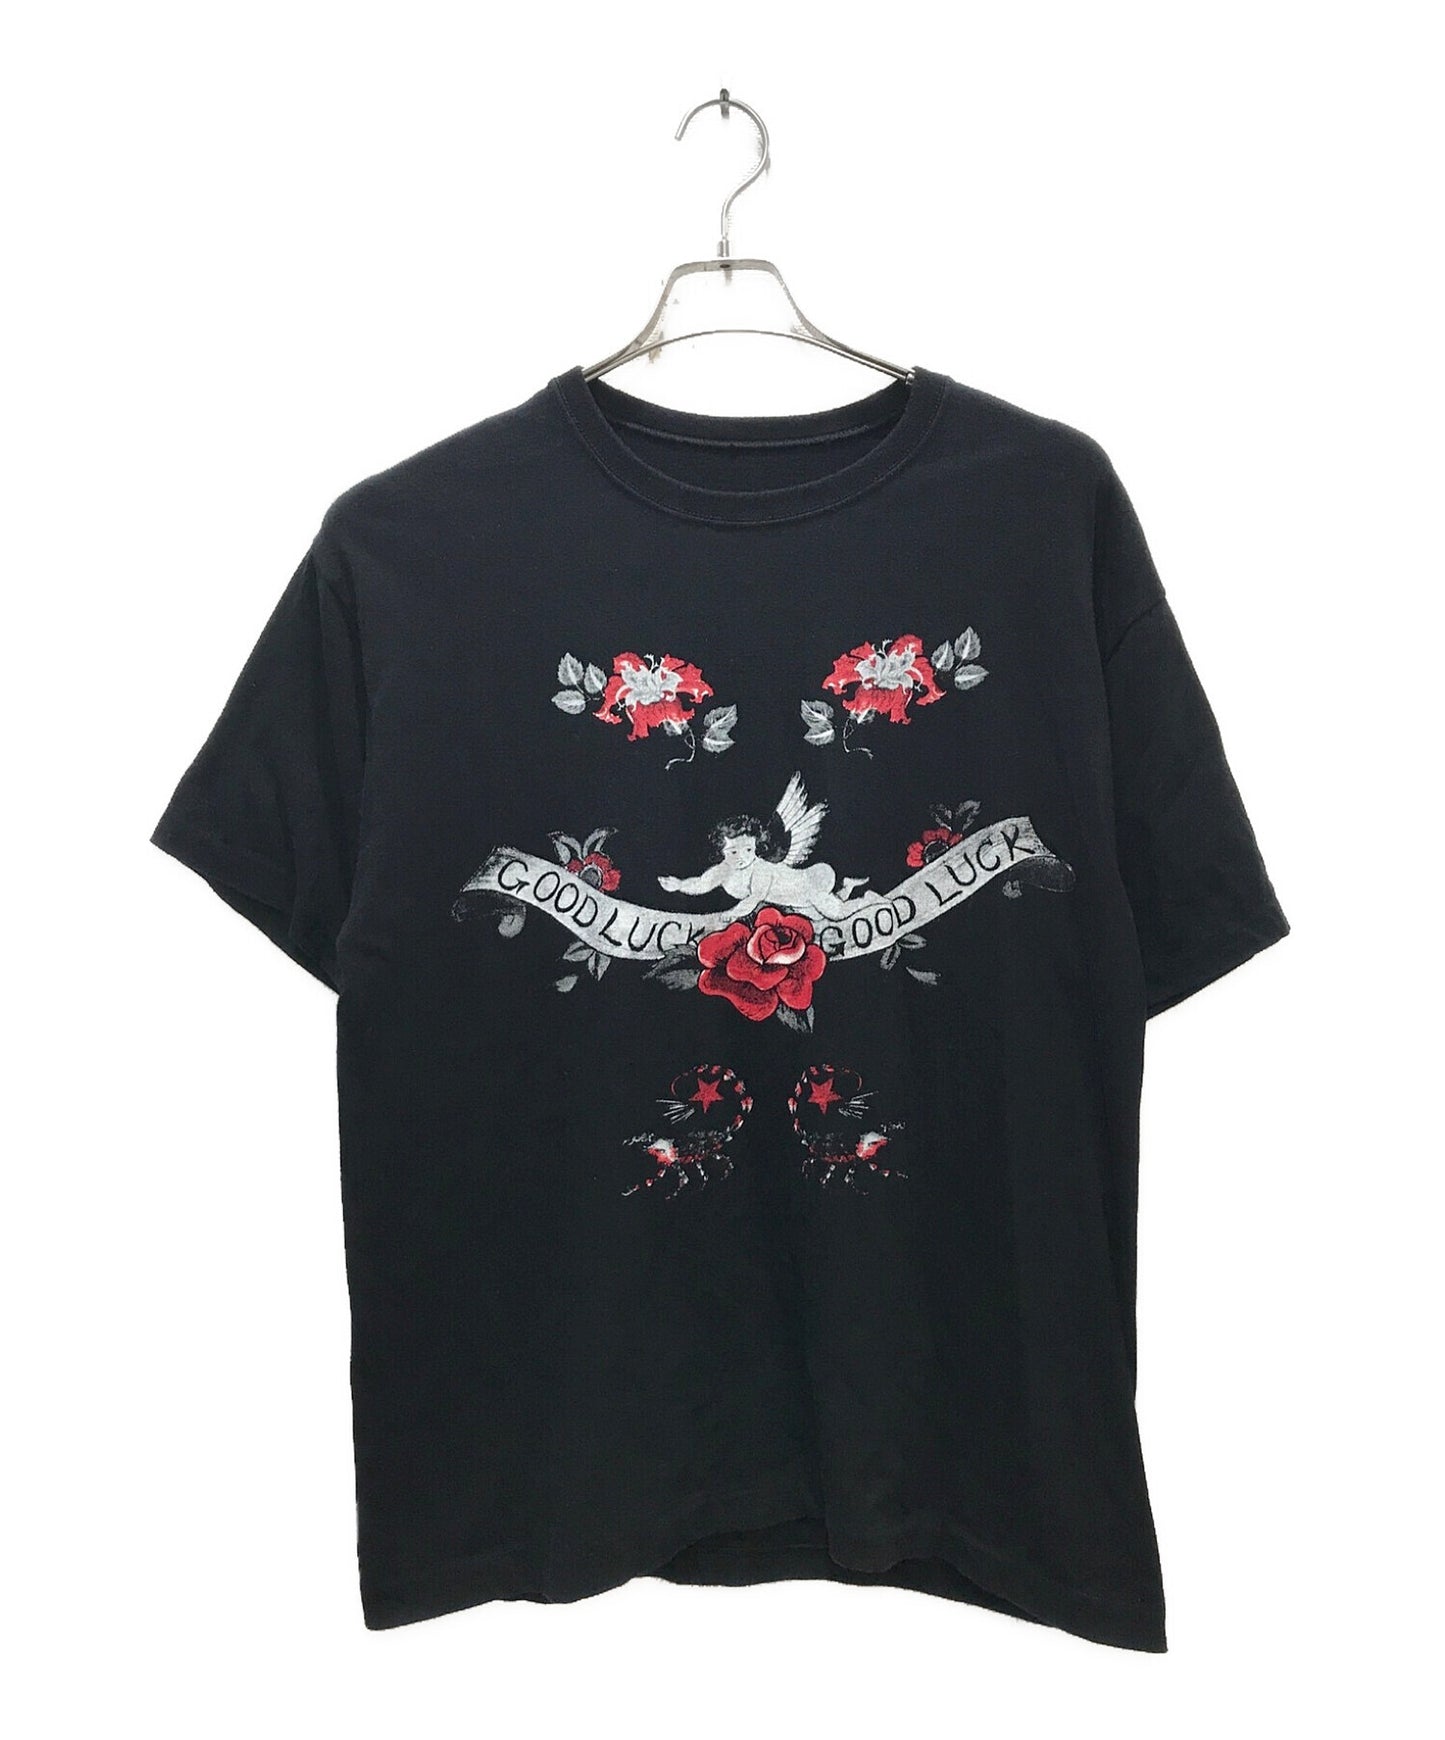 Yohji Yamamoto的S'yte 20/Cottonjersey海盗纹身T恤UH-T91-006